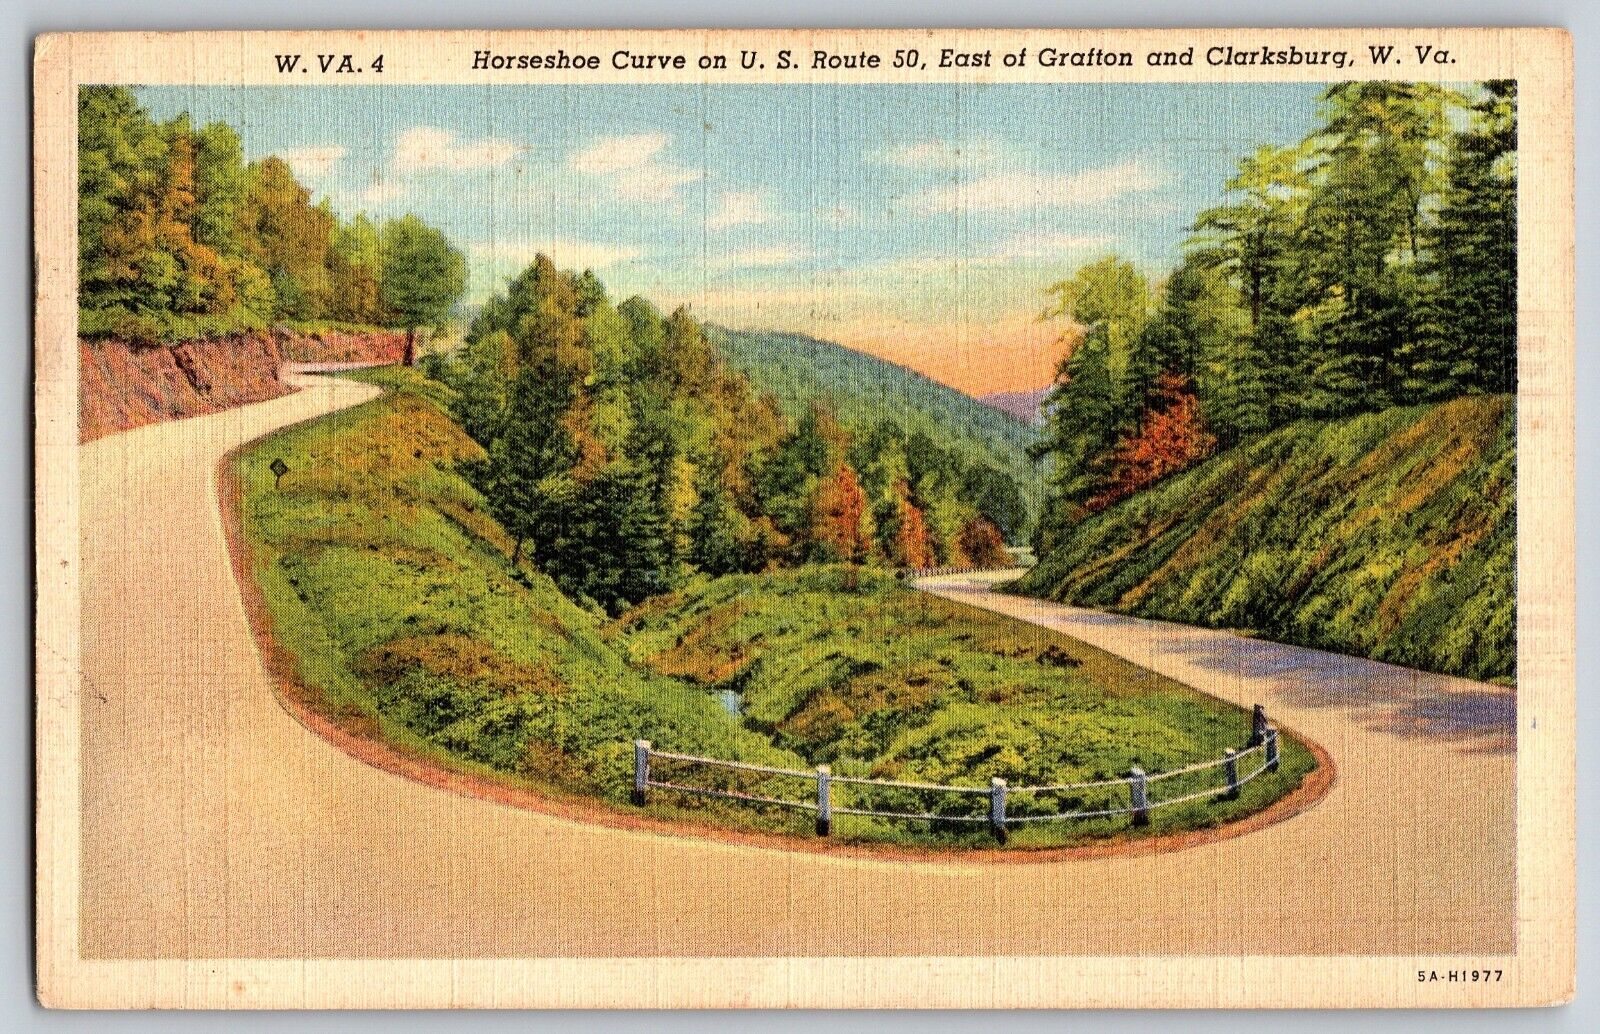 West Virginia, Clarksburg - Horseshoe Curve On U.S. Route 50 - Vintage Postcard